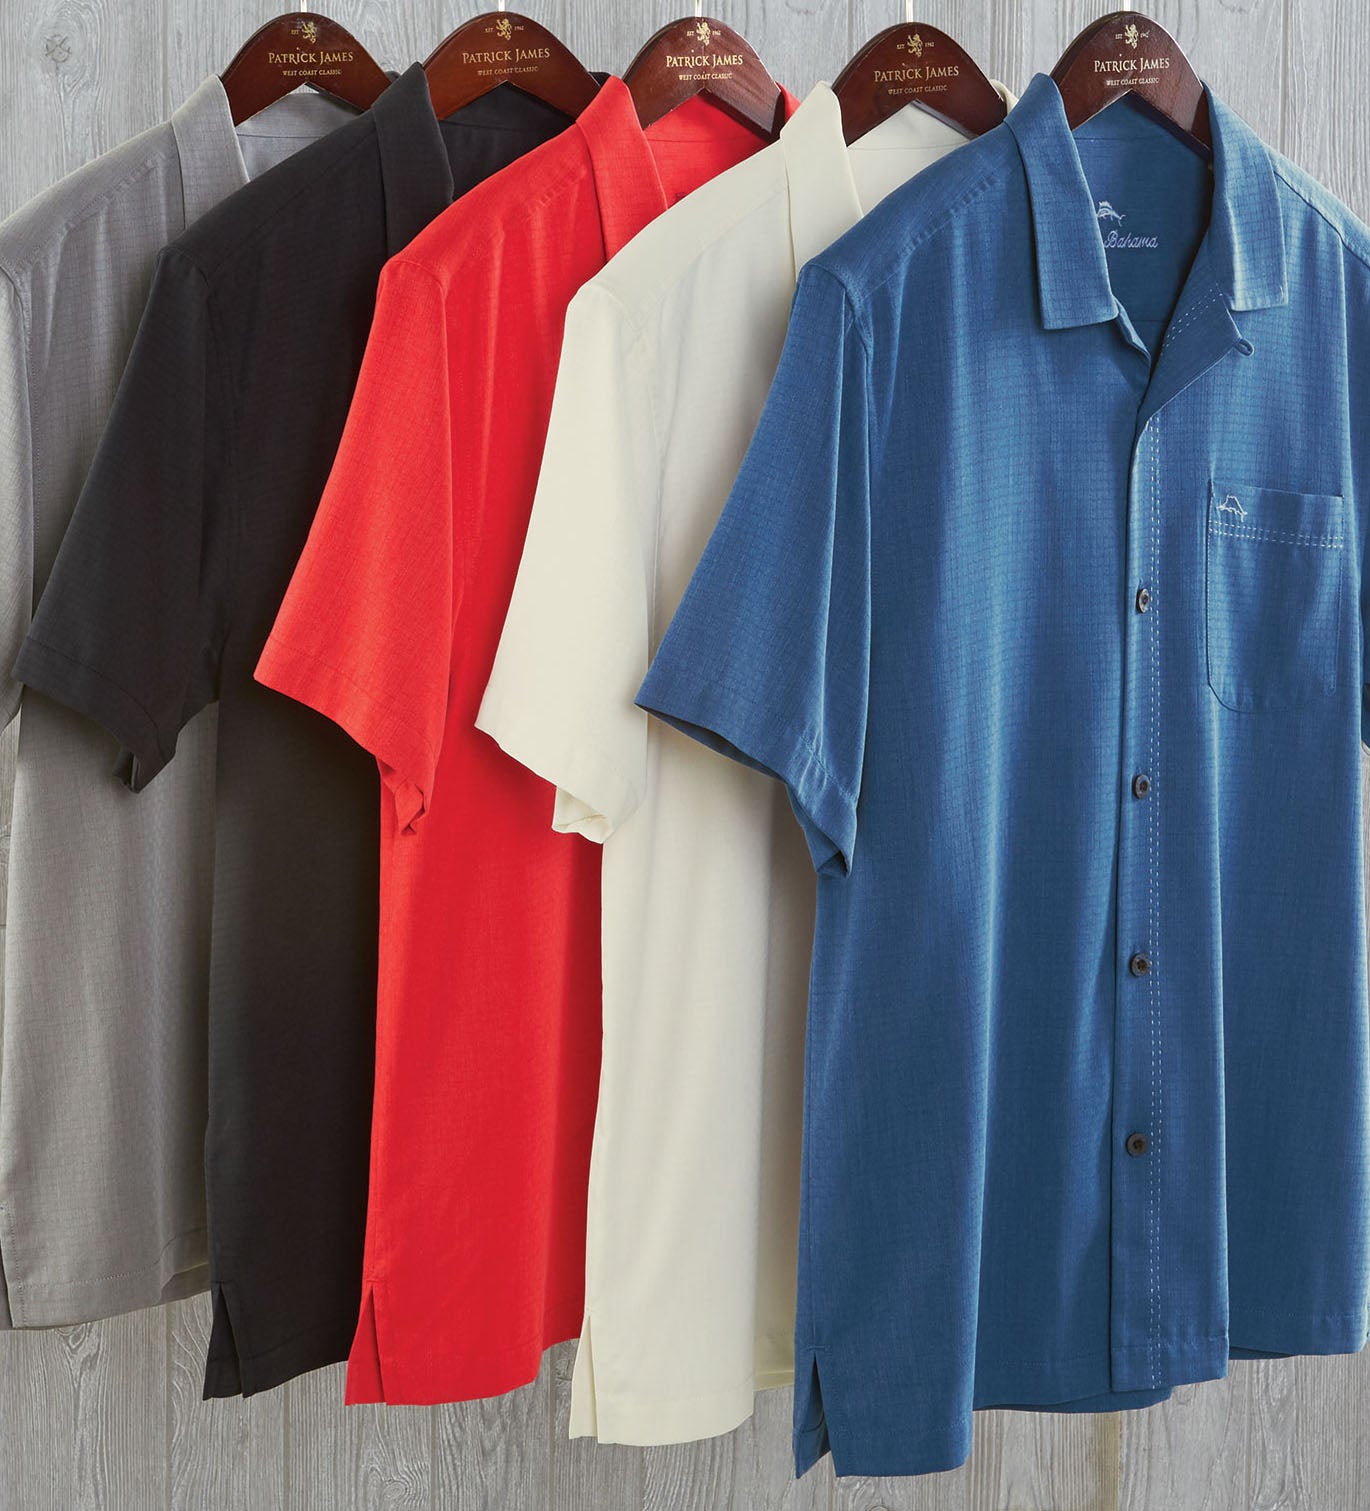 Tommy Bahama Men's Coastal Breeze Check Shirt - Size L, Dockside Blue